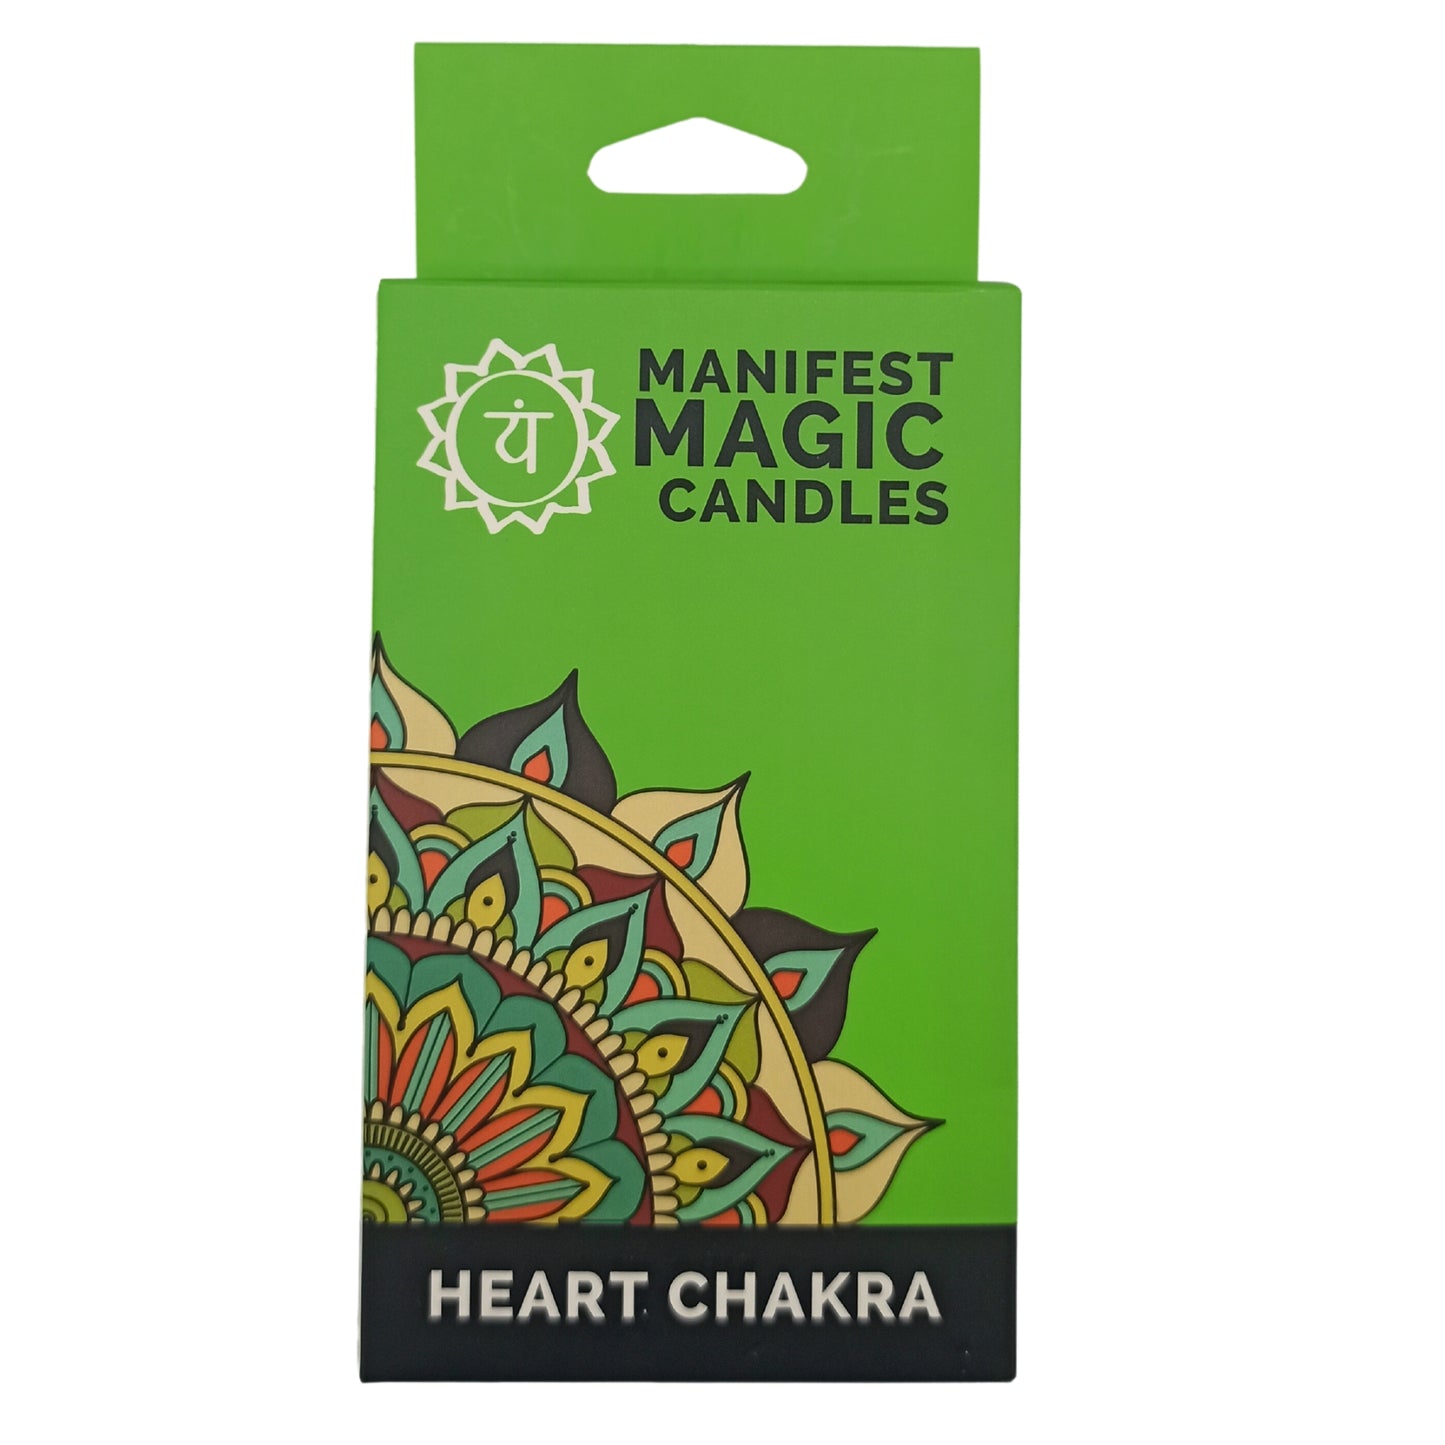 Manifest Magic Candles (pack of 12) - Green - Heart Chakra - Kaftans direct